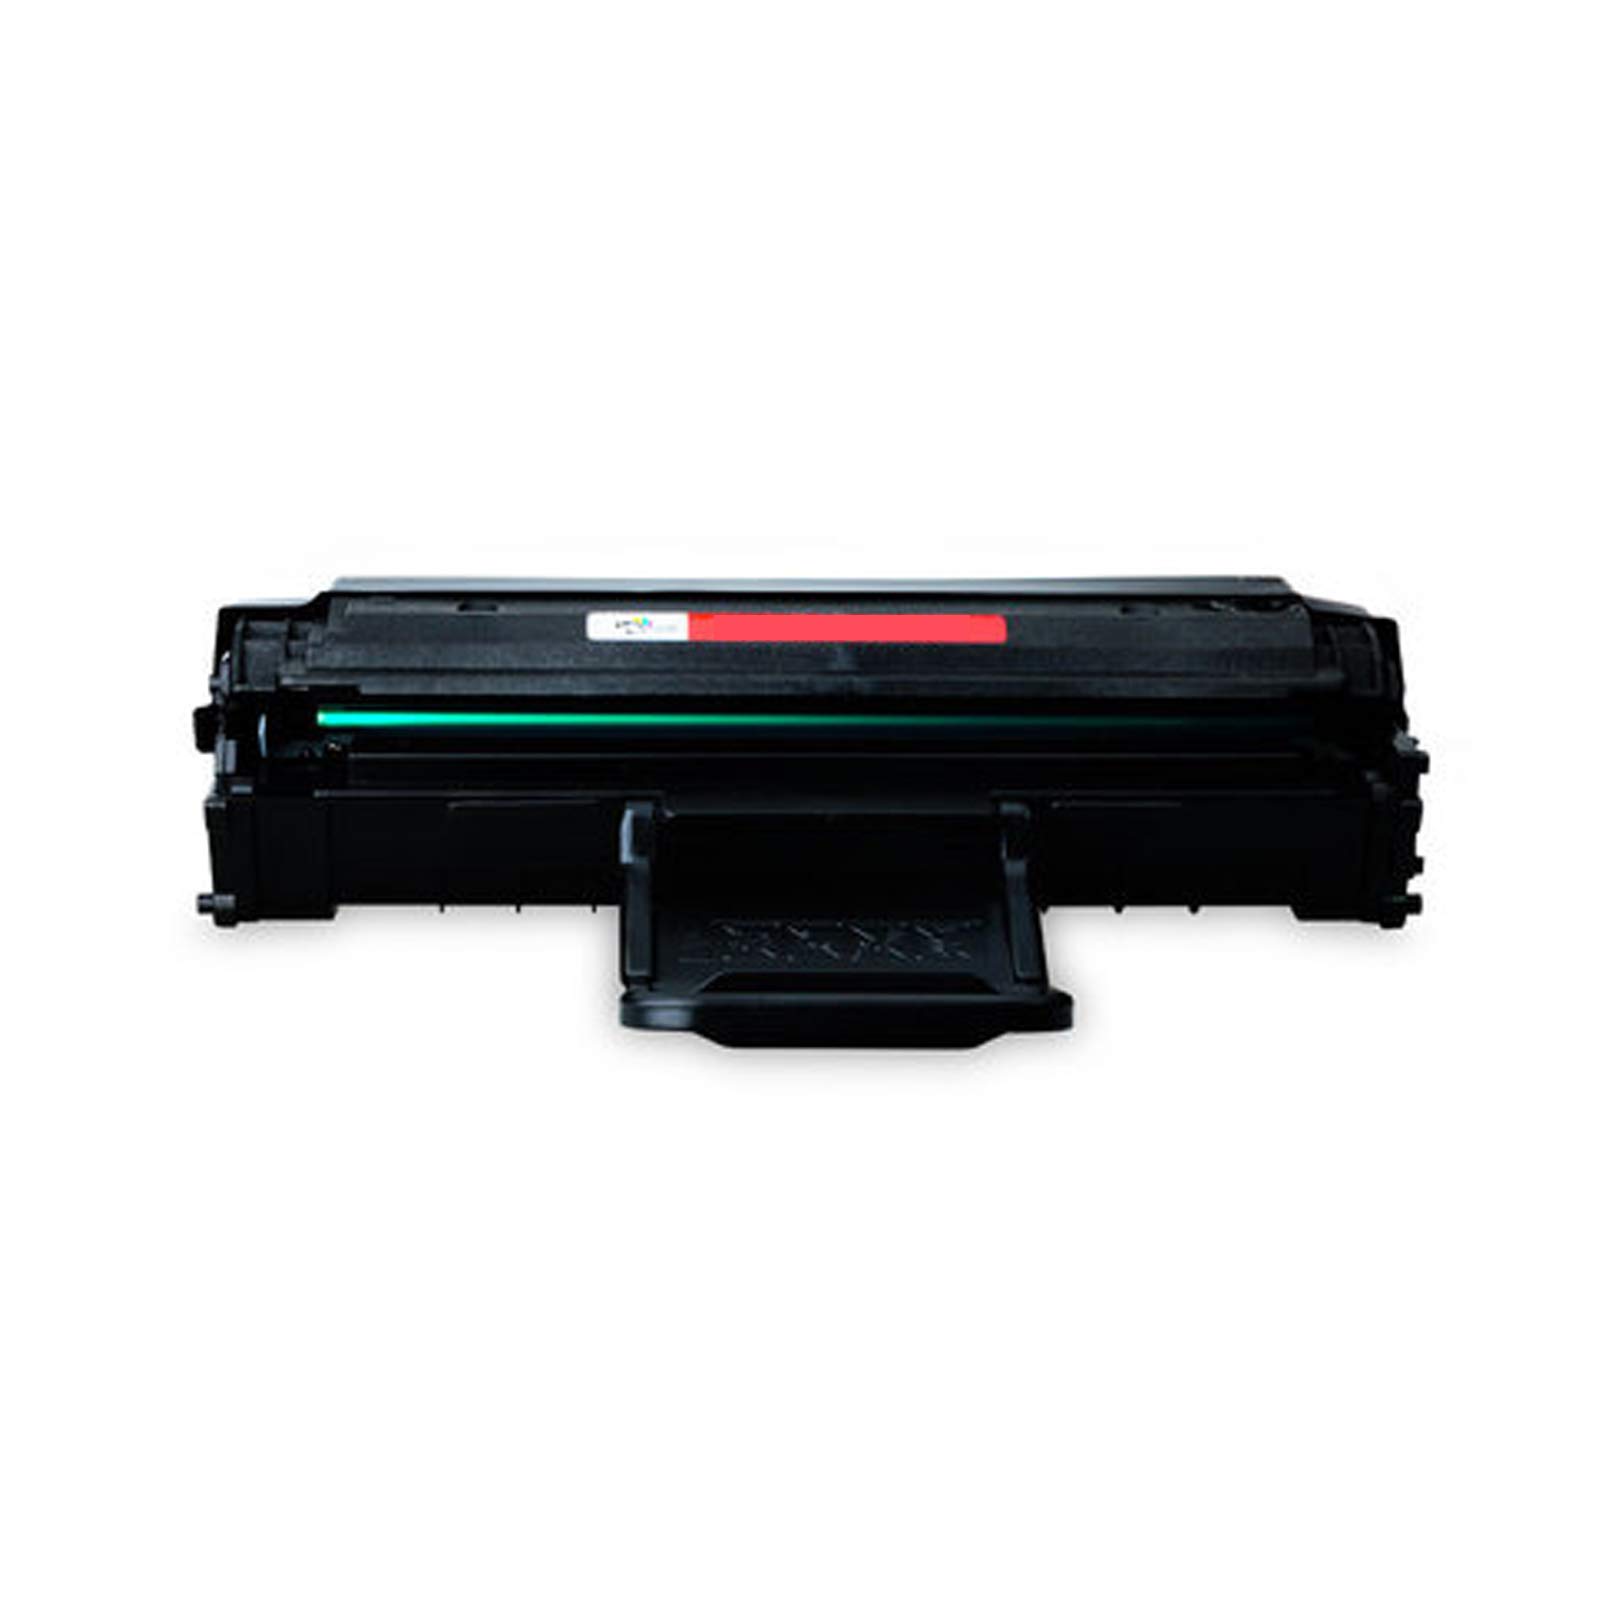 Samsung ML-2240 Laser Printer series